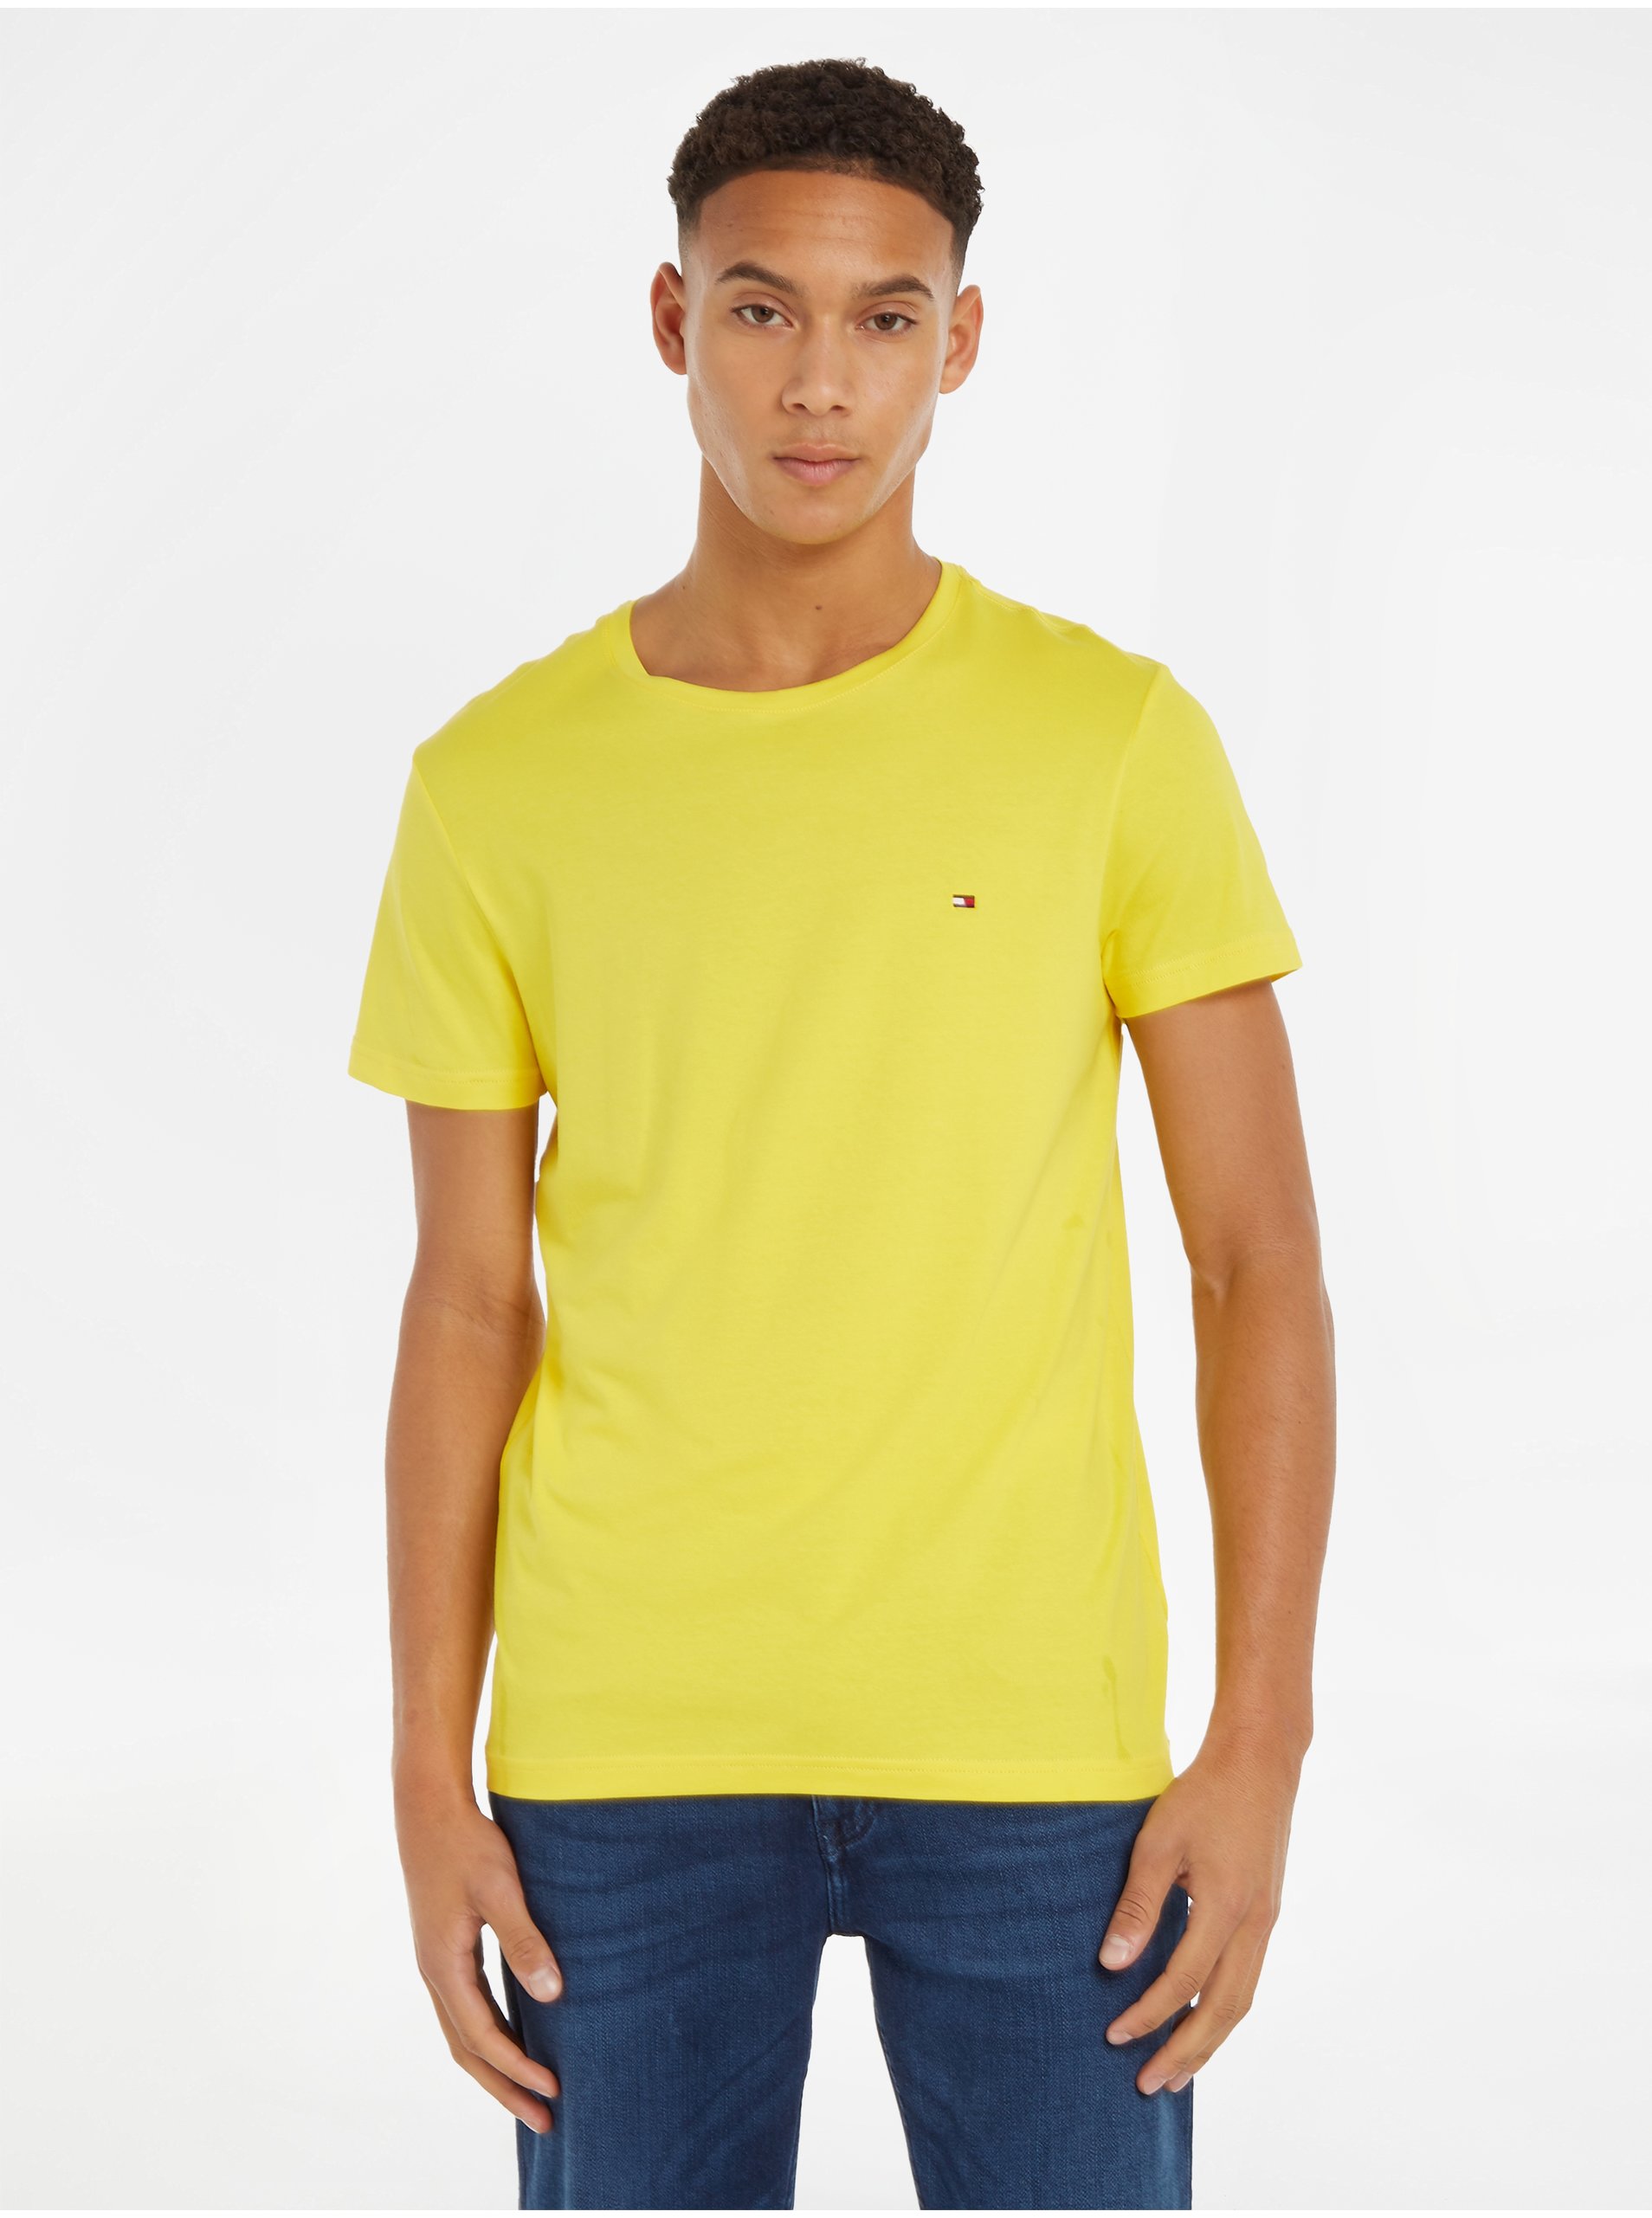 Lacno Basic tričká pre mužov Tommy Hilfiger - žltá